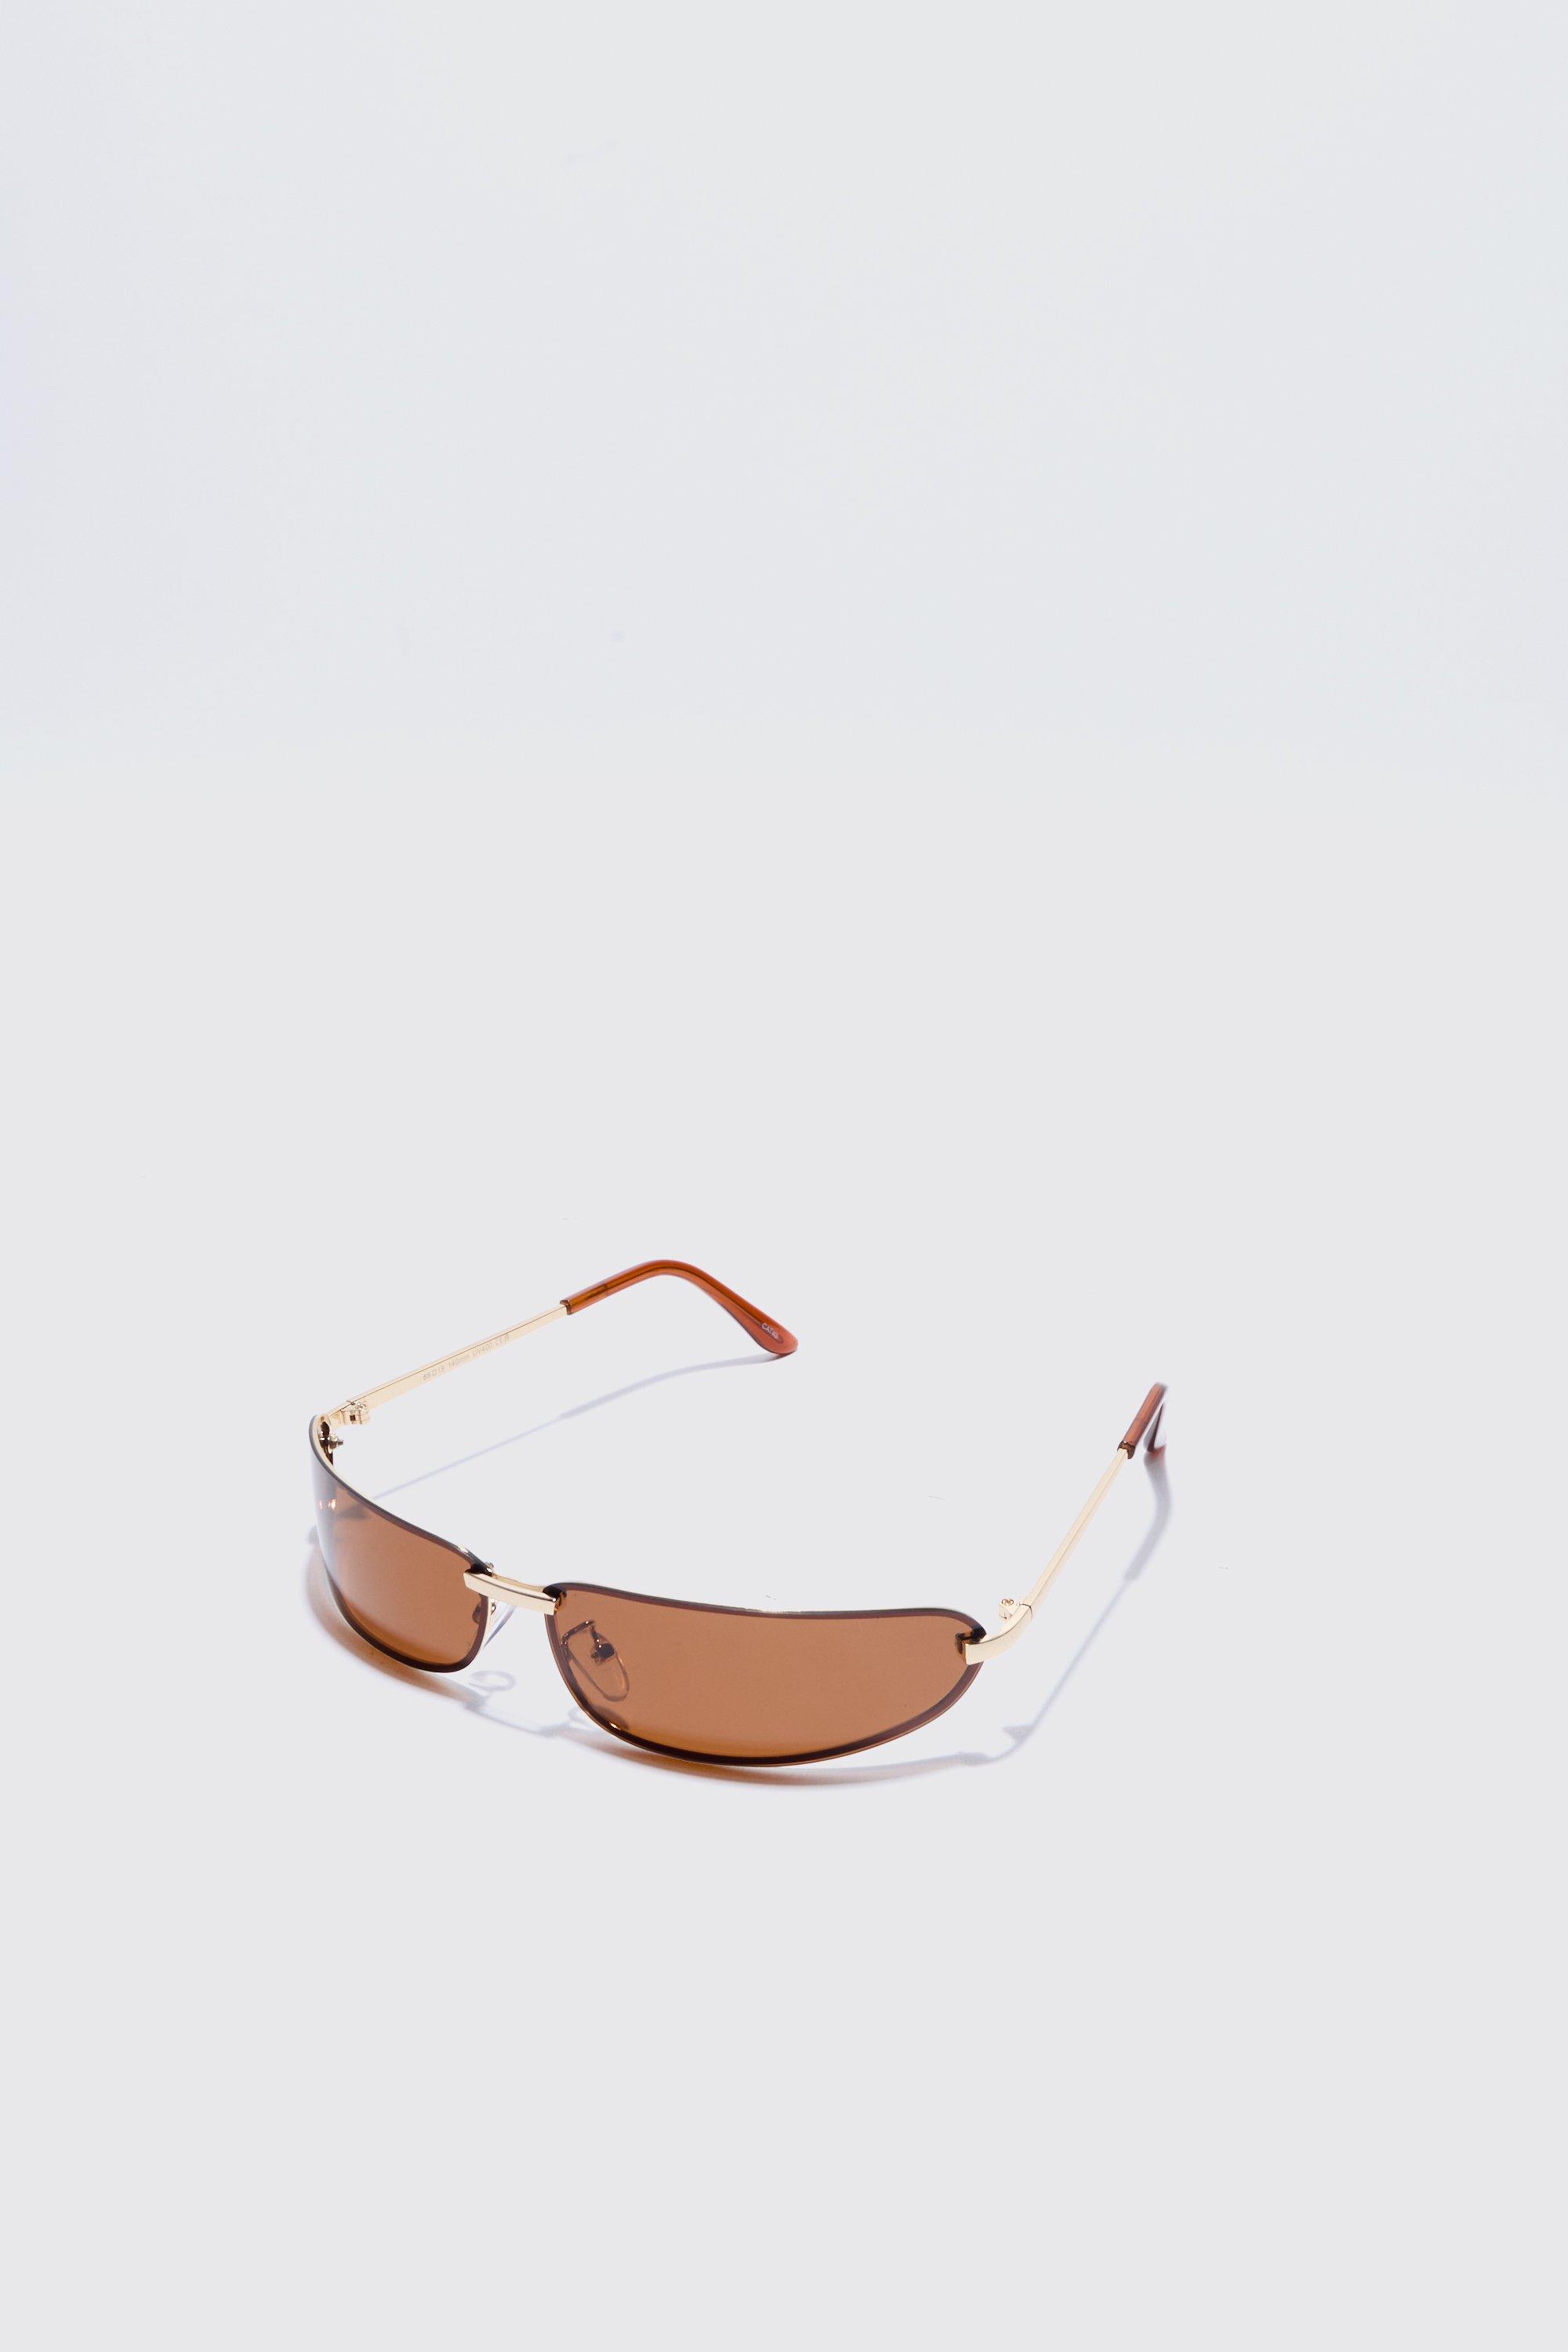 men's wrap lens metal sunglasses - brown - one size, brown